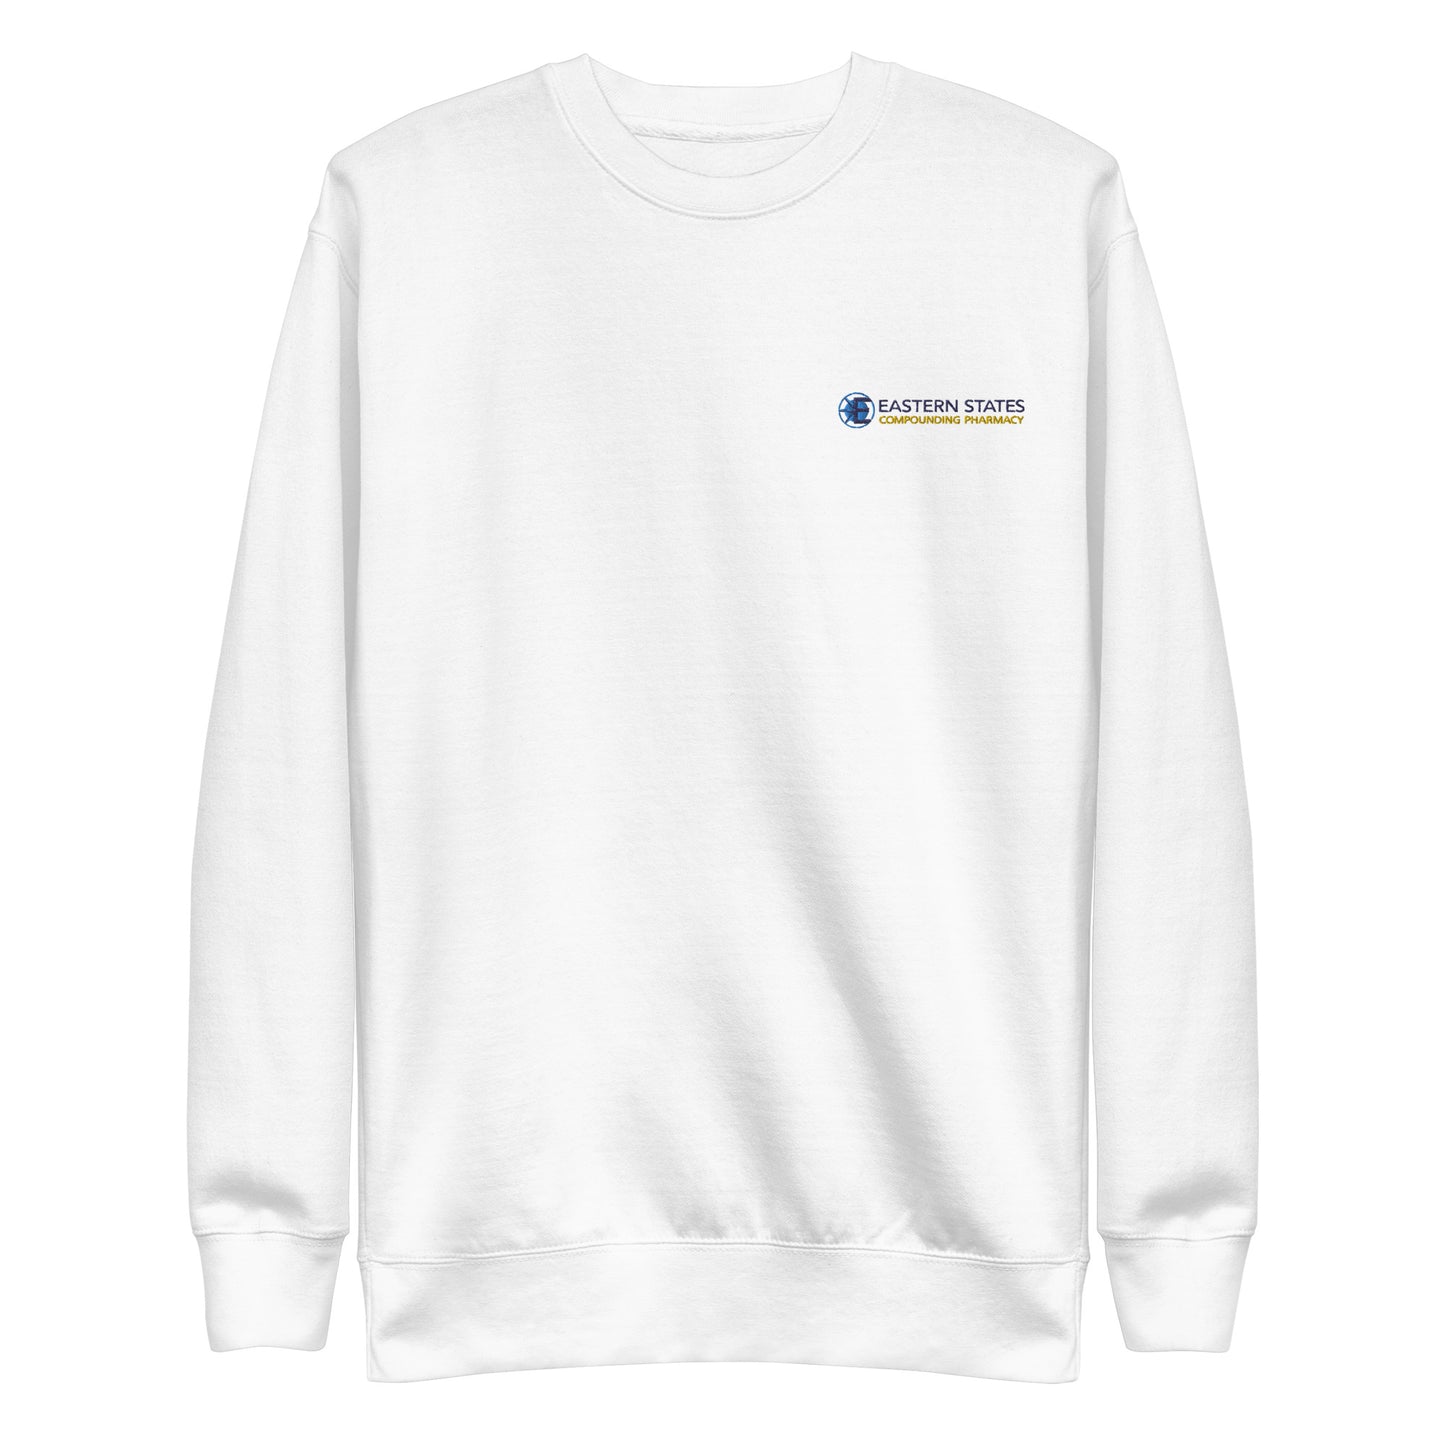 Unisex Premium Sweatshirt (fitted cut) - Eastern States